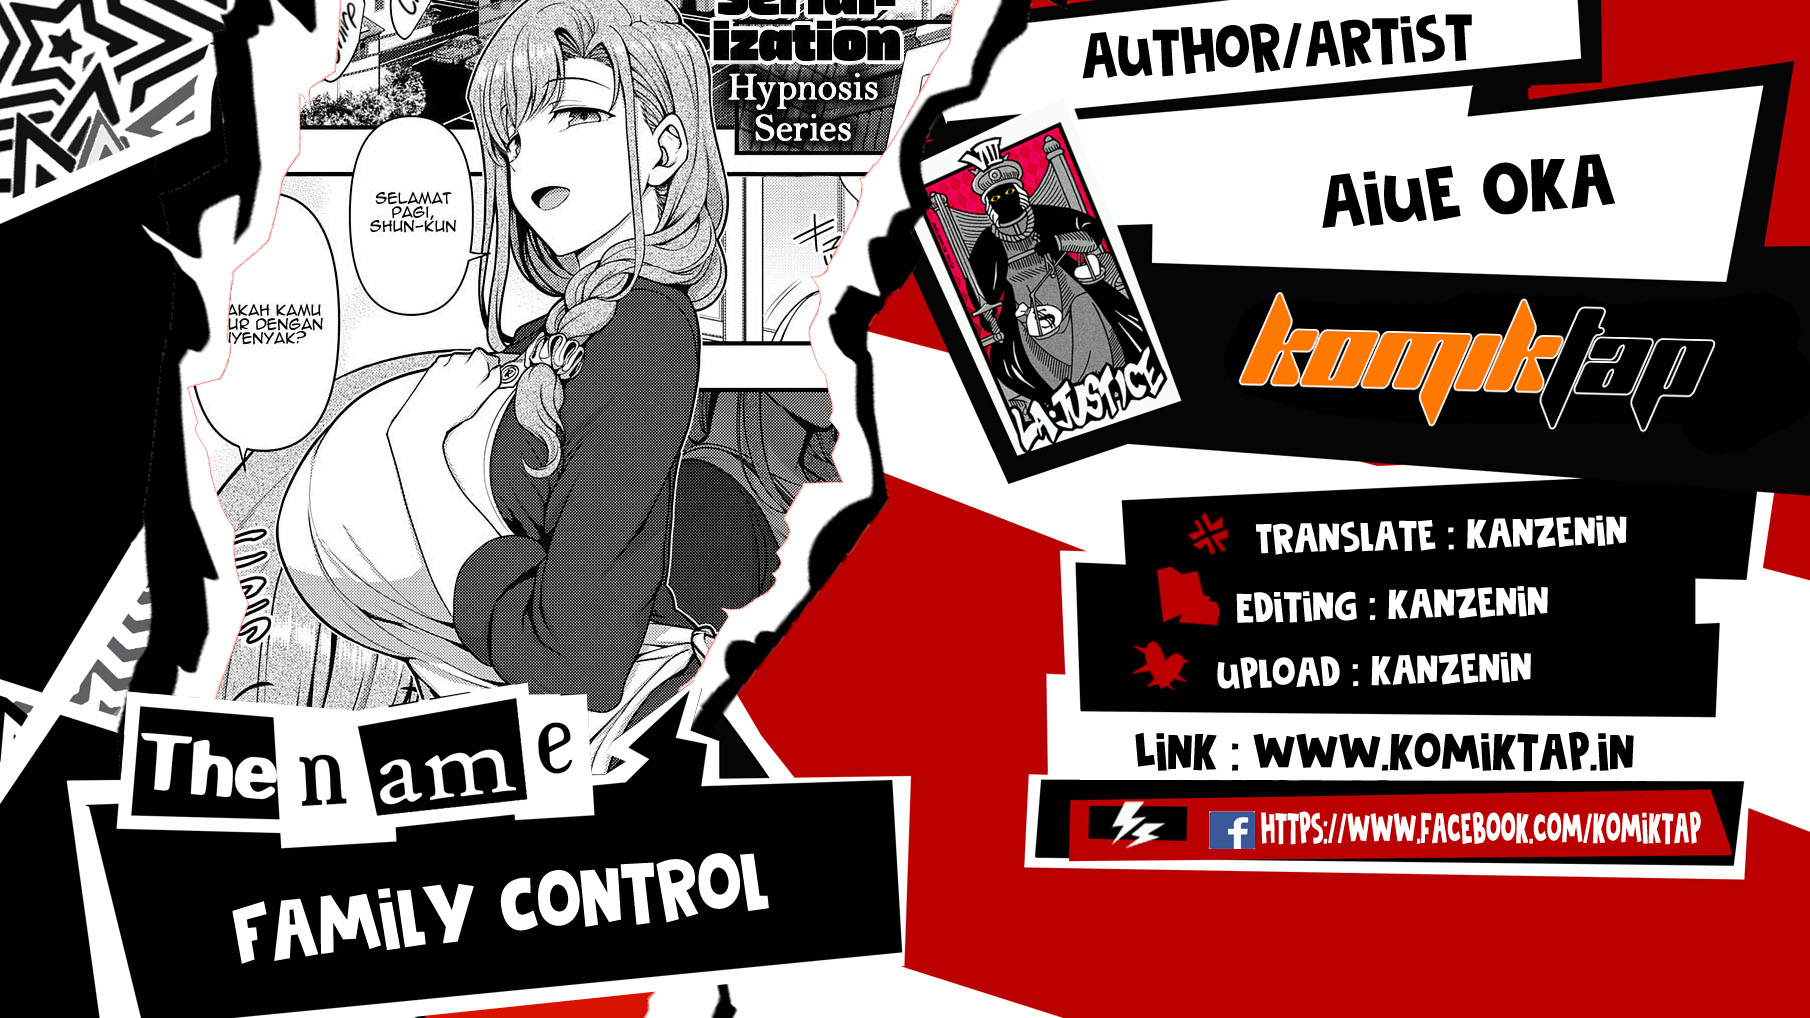 Манга семья против независимости 26. Family Control Manga. Aiue Oka Family Control. Aiue Oka Family Control Ch.2. Family Control 3 Manga.